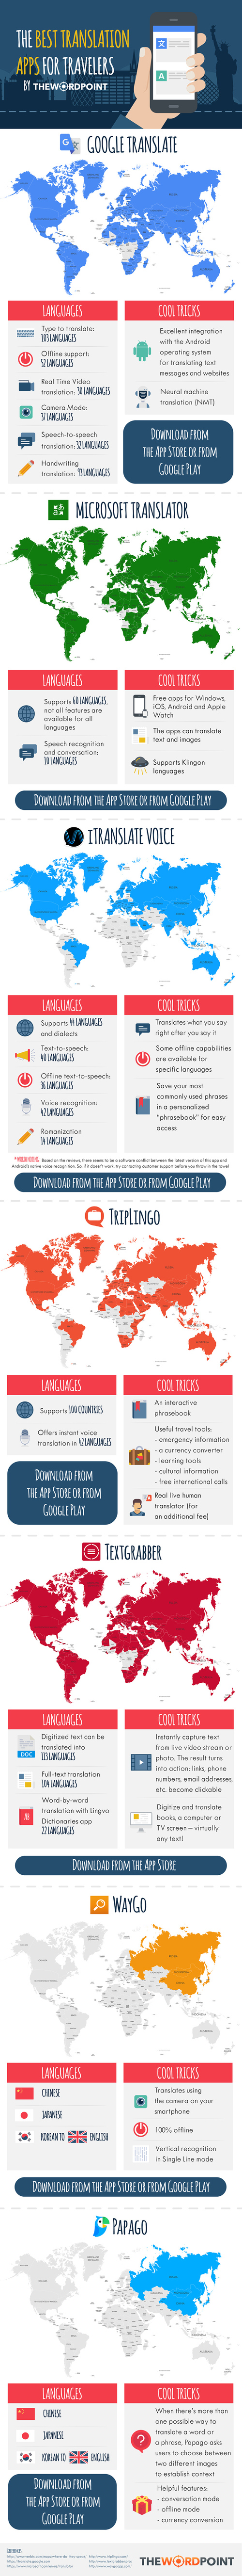 language translation apps infographic